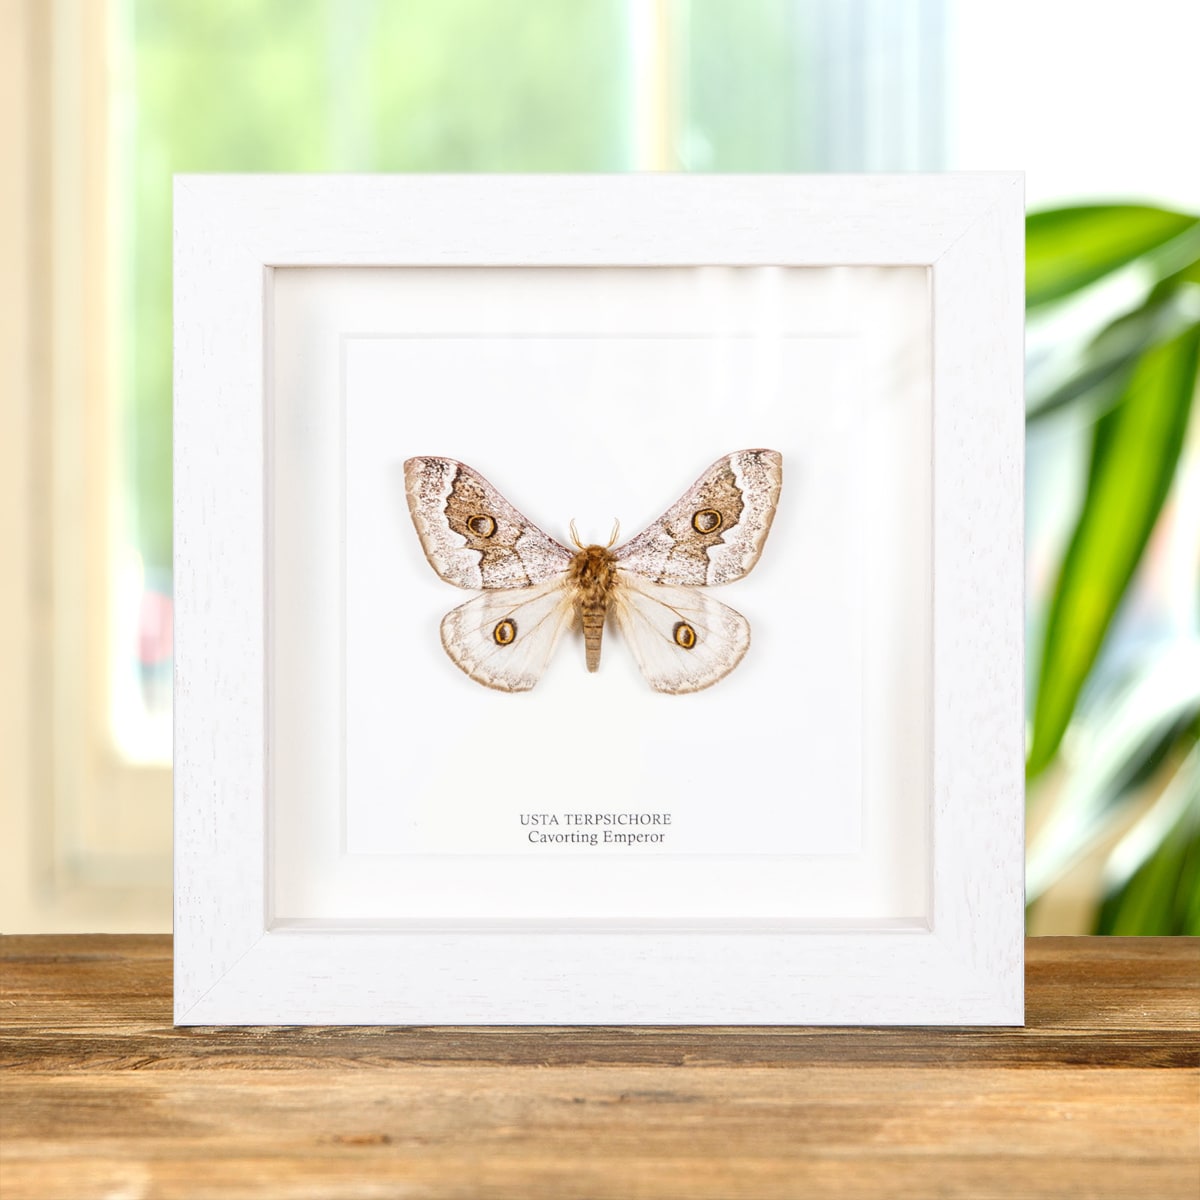 Cavorting Emperor Moth In Box Frame (Usta terpsichore)